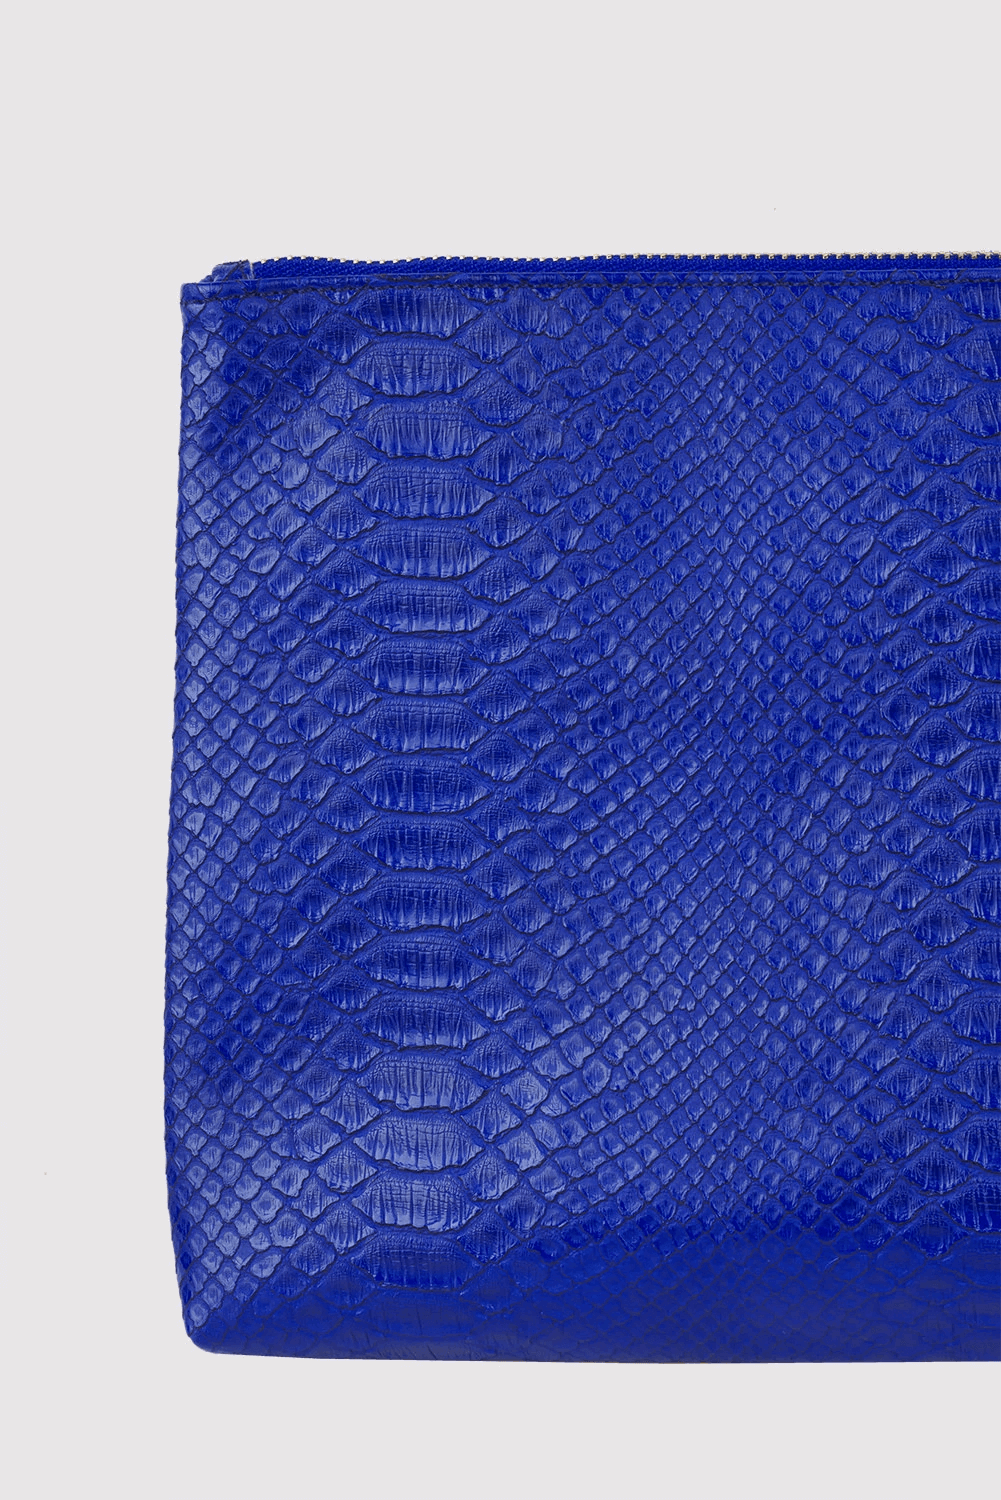 Americo Snake Print Wrist Strap Zipped Tassel Clutch Bag in Blue